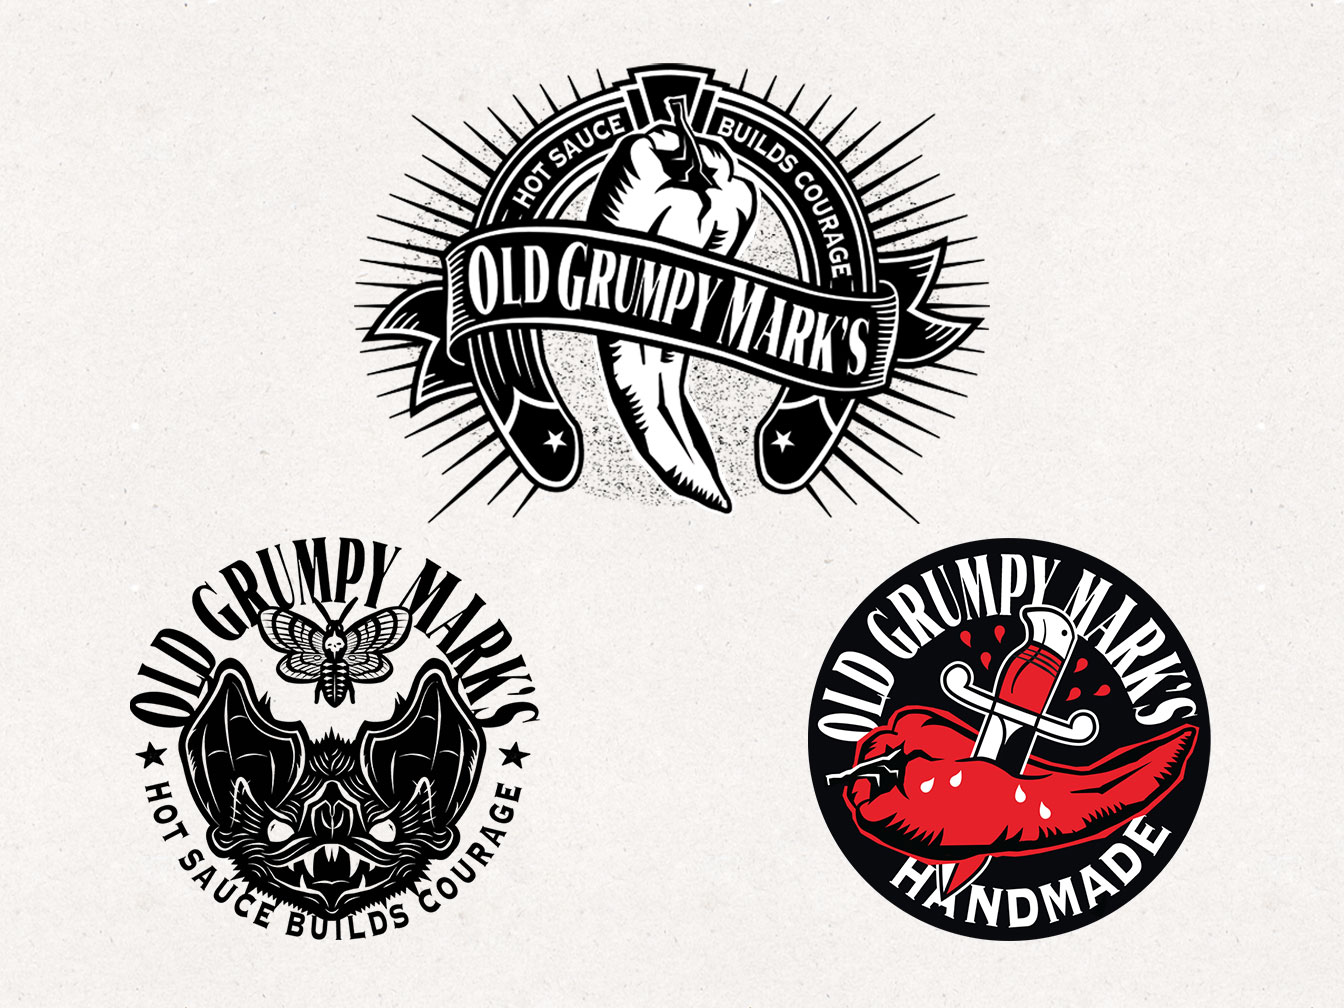 Old Grumpy Mark's - Logo and Sticker Designs